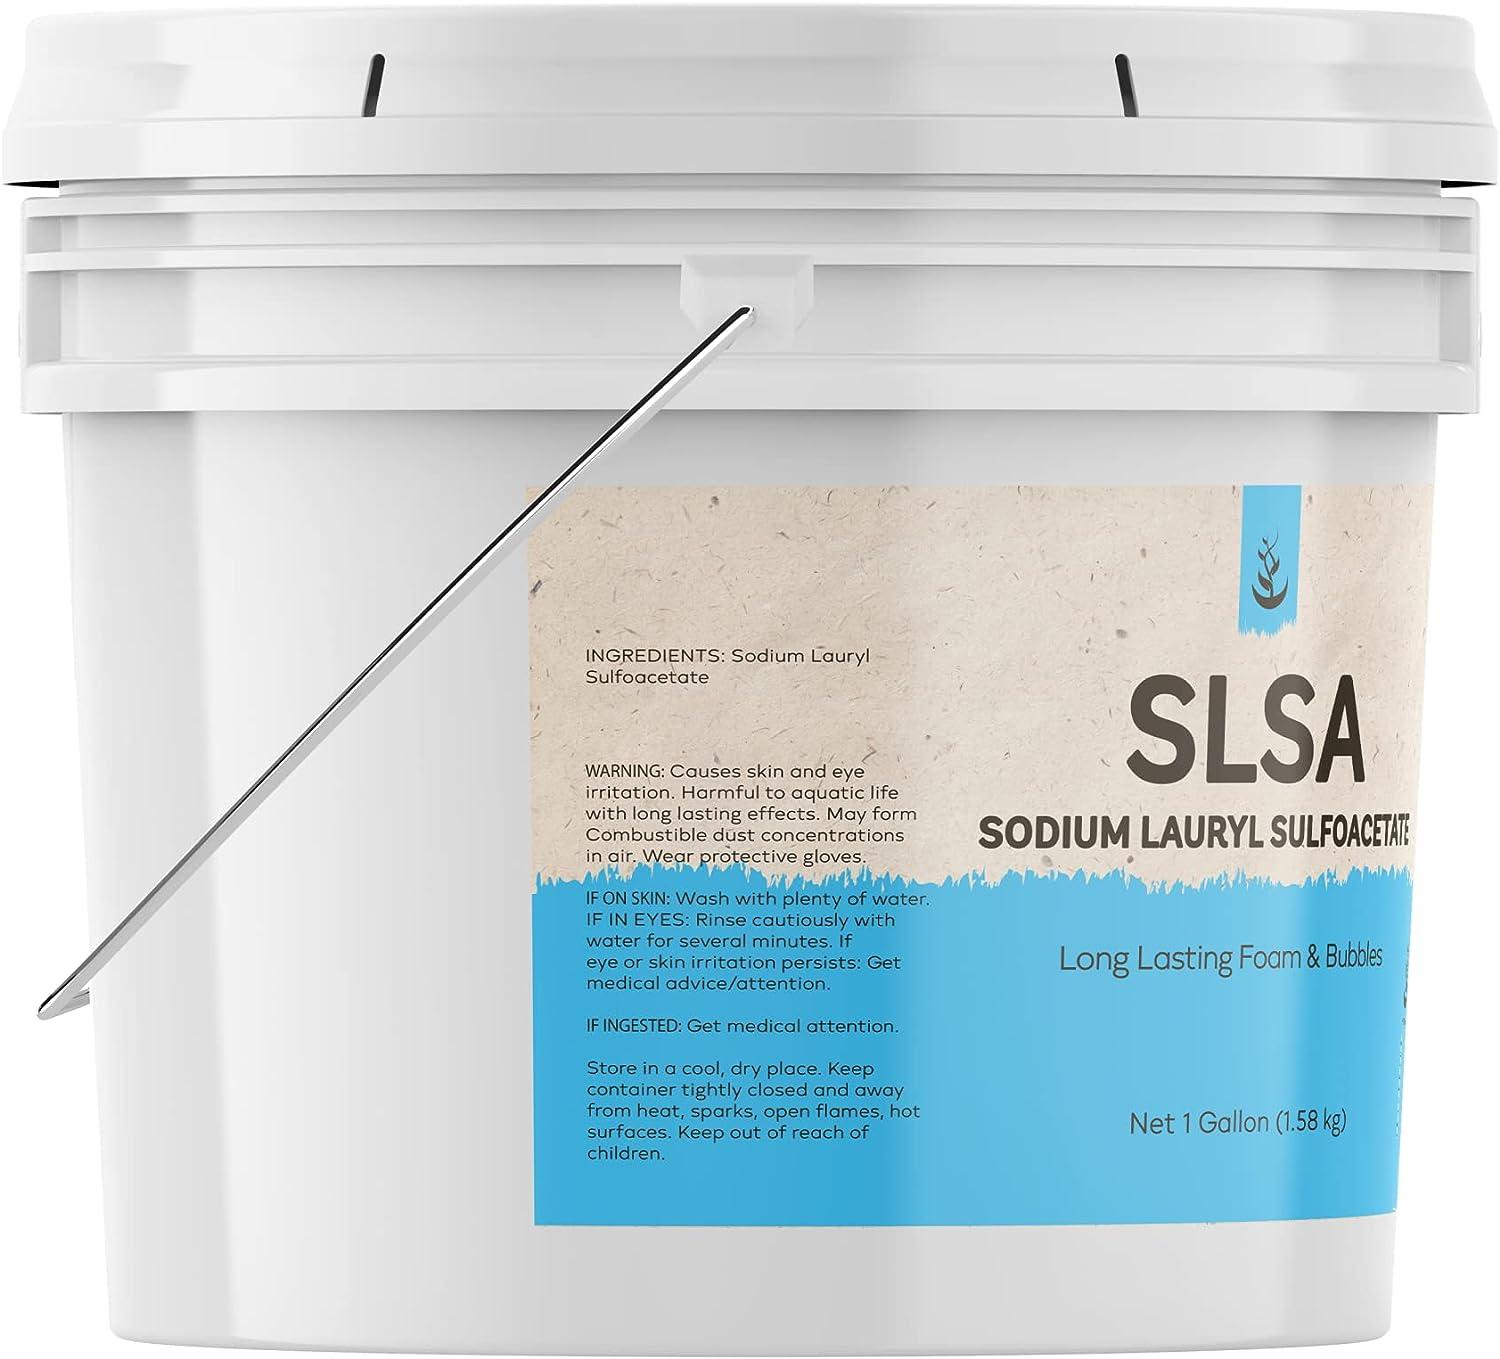 Sodium Lauryl Sulfoacetate - SLSA | BrambleBerry